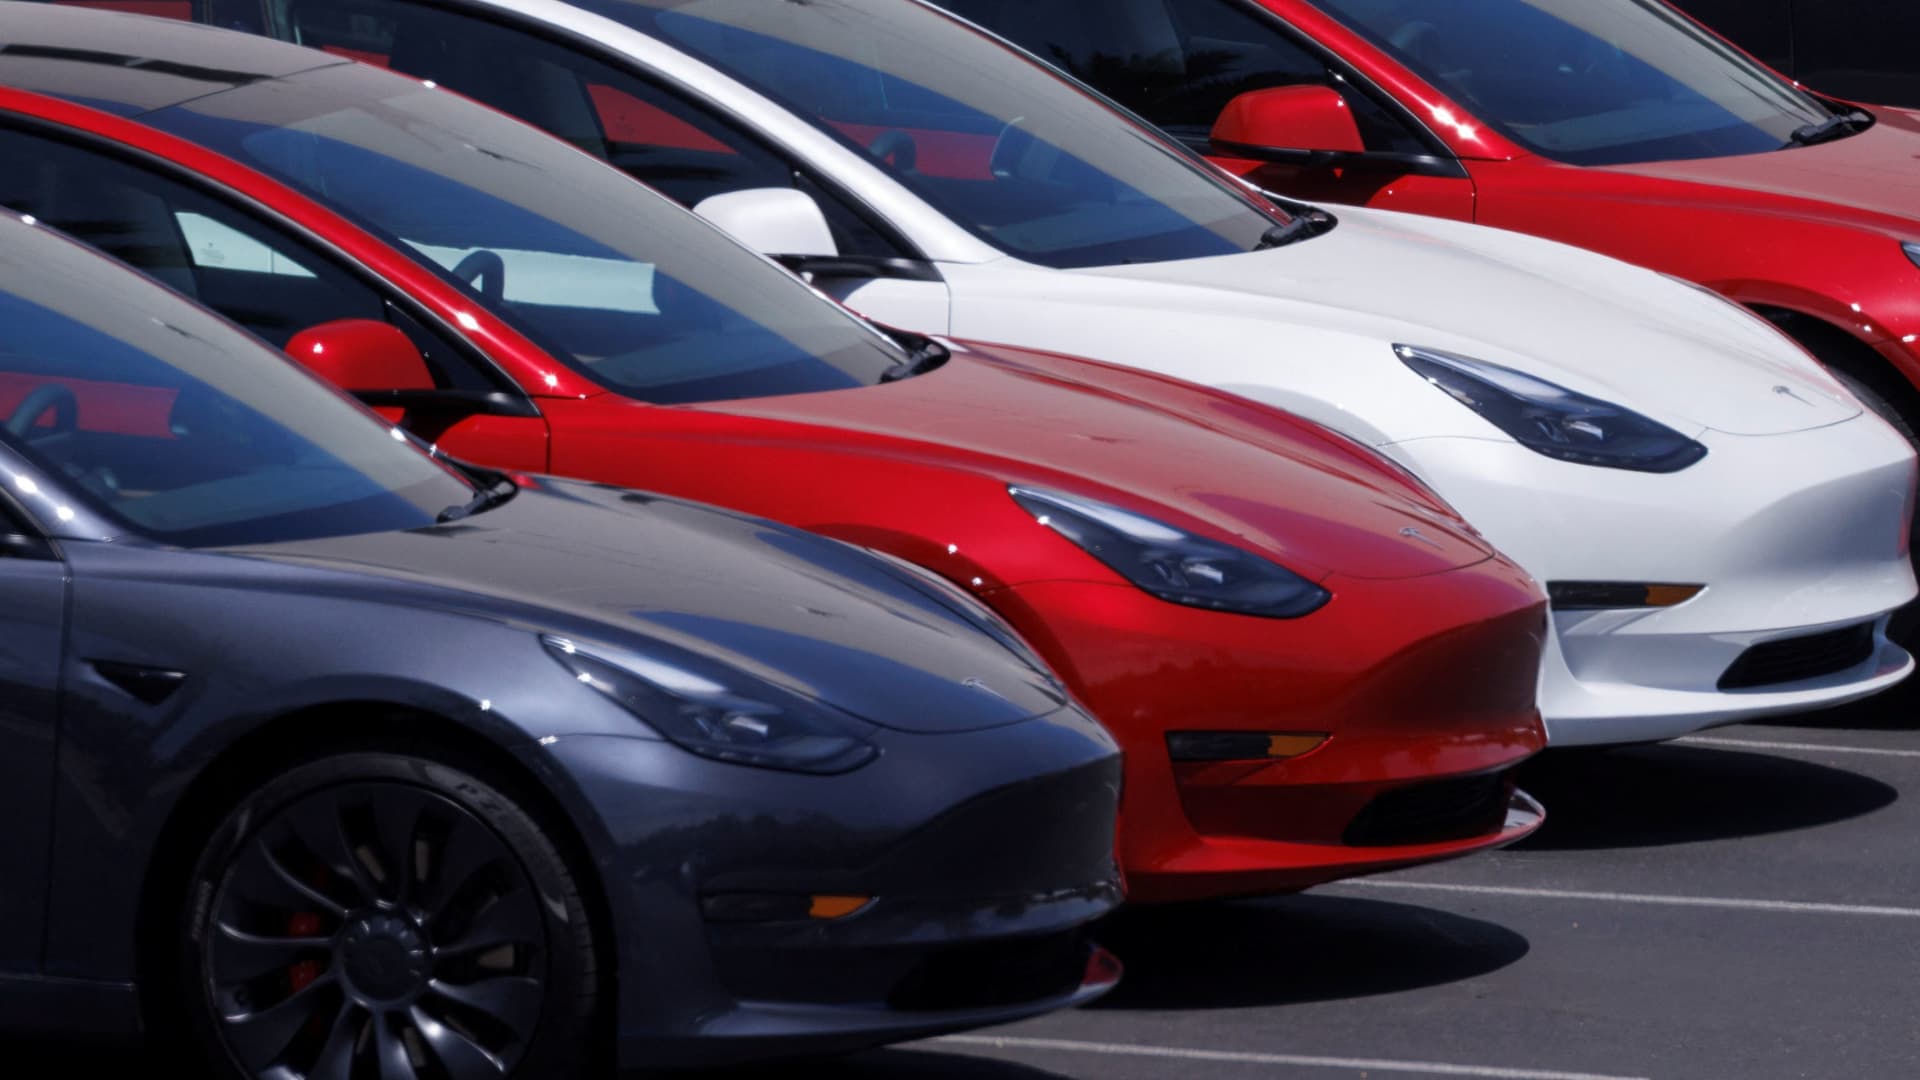 GM, Ford rising, Tesla falling in EV ‘car wars’ in U.S., Bank of America analyst says